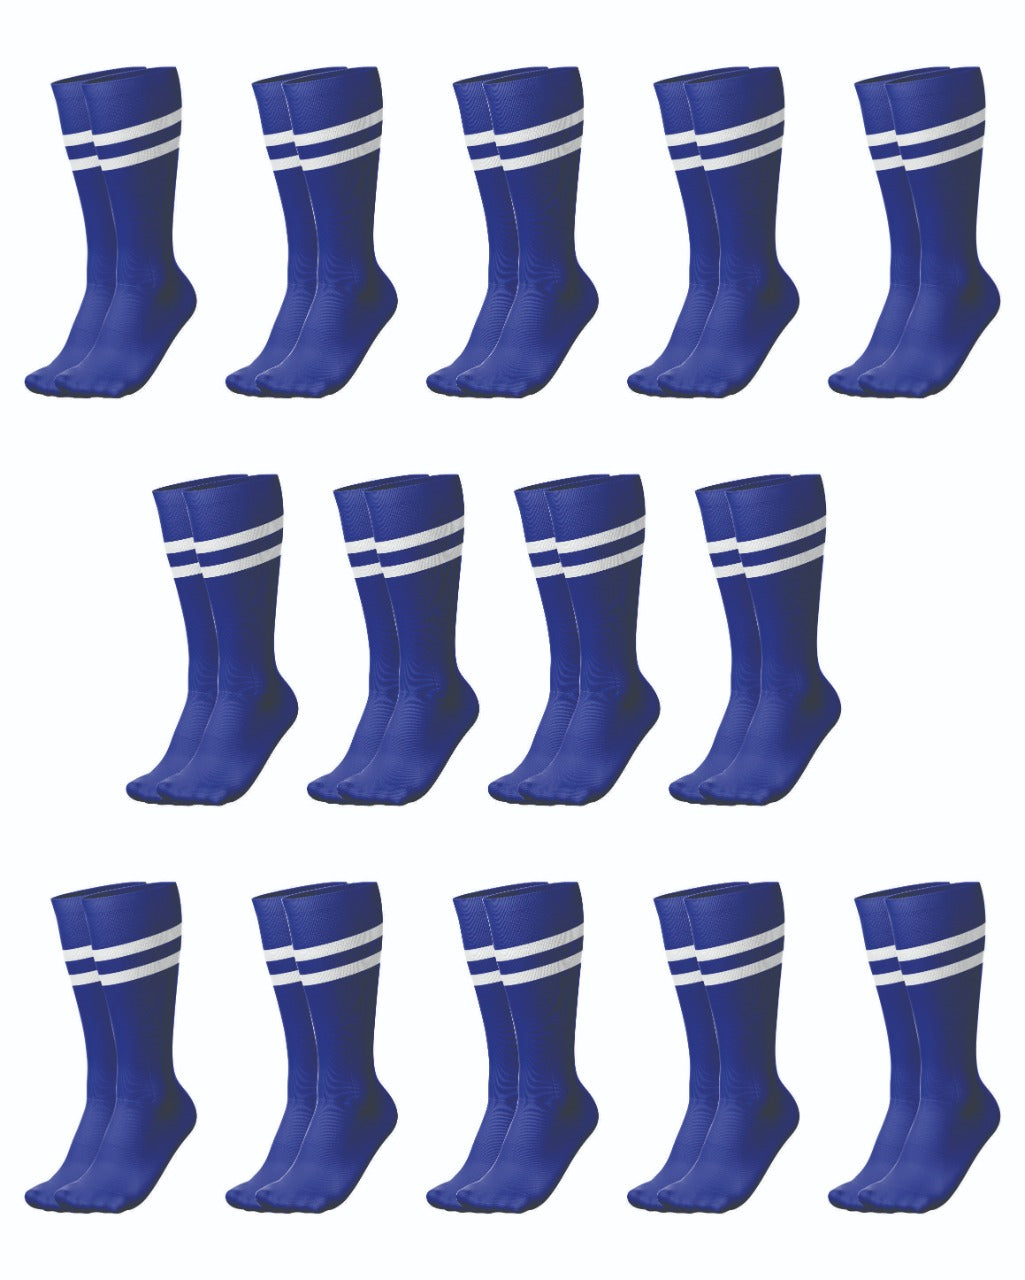 Ronex Soccer Socks - Set of 14 Pairs